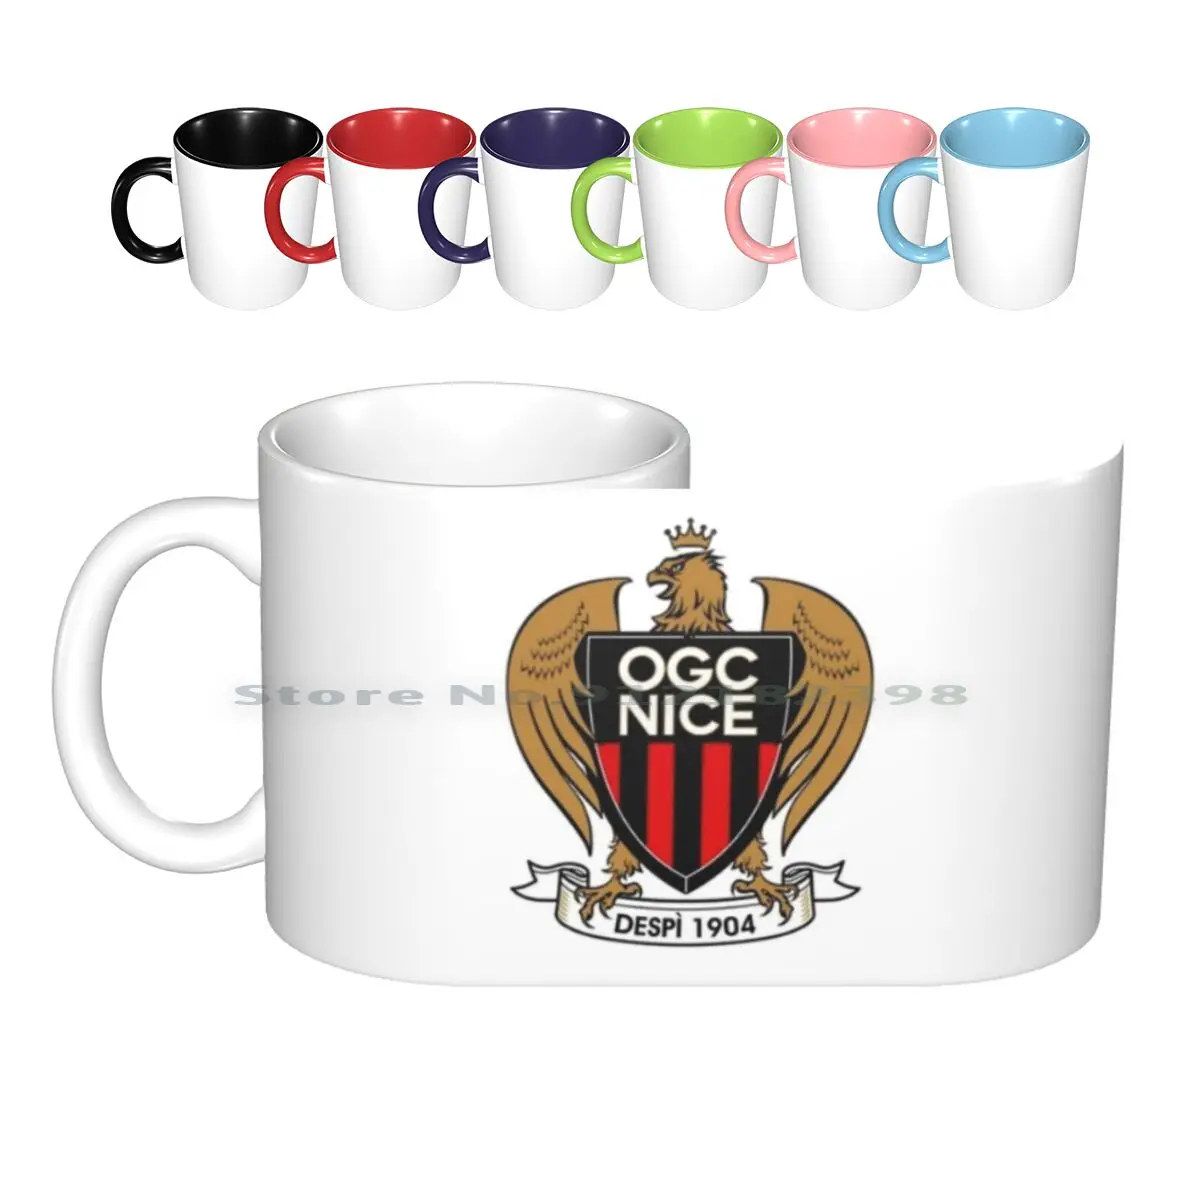 Ogc Nice Ceramic Mugs Coffee Cups Milk Tea Mug Football Futebol Soccer Sport Tikitaka Serie A Club Logo Team Logo Epl